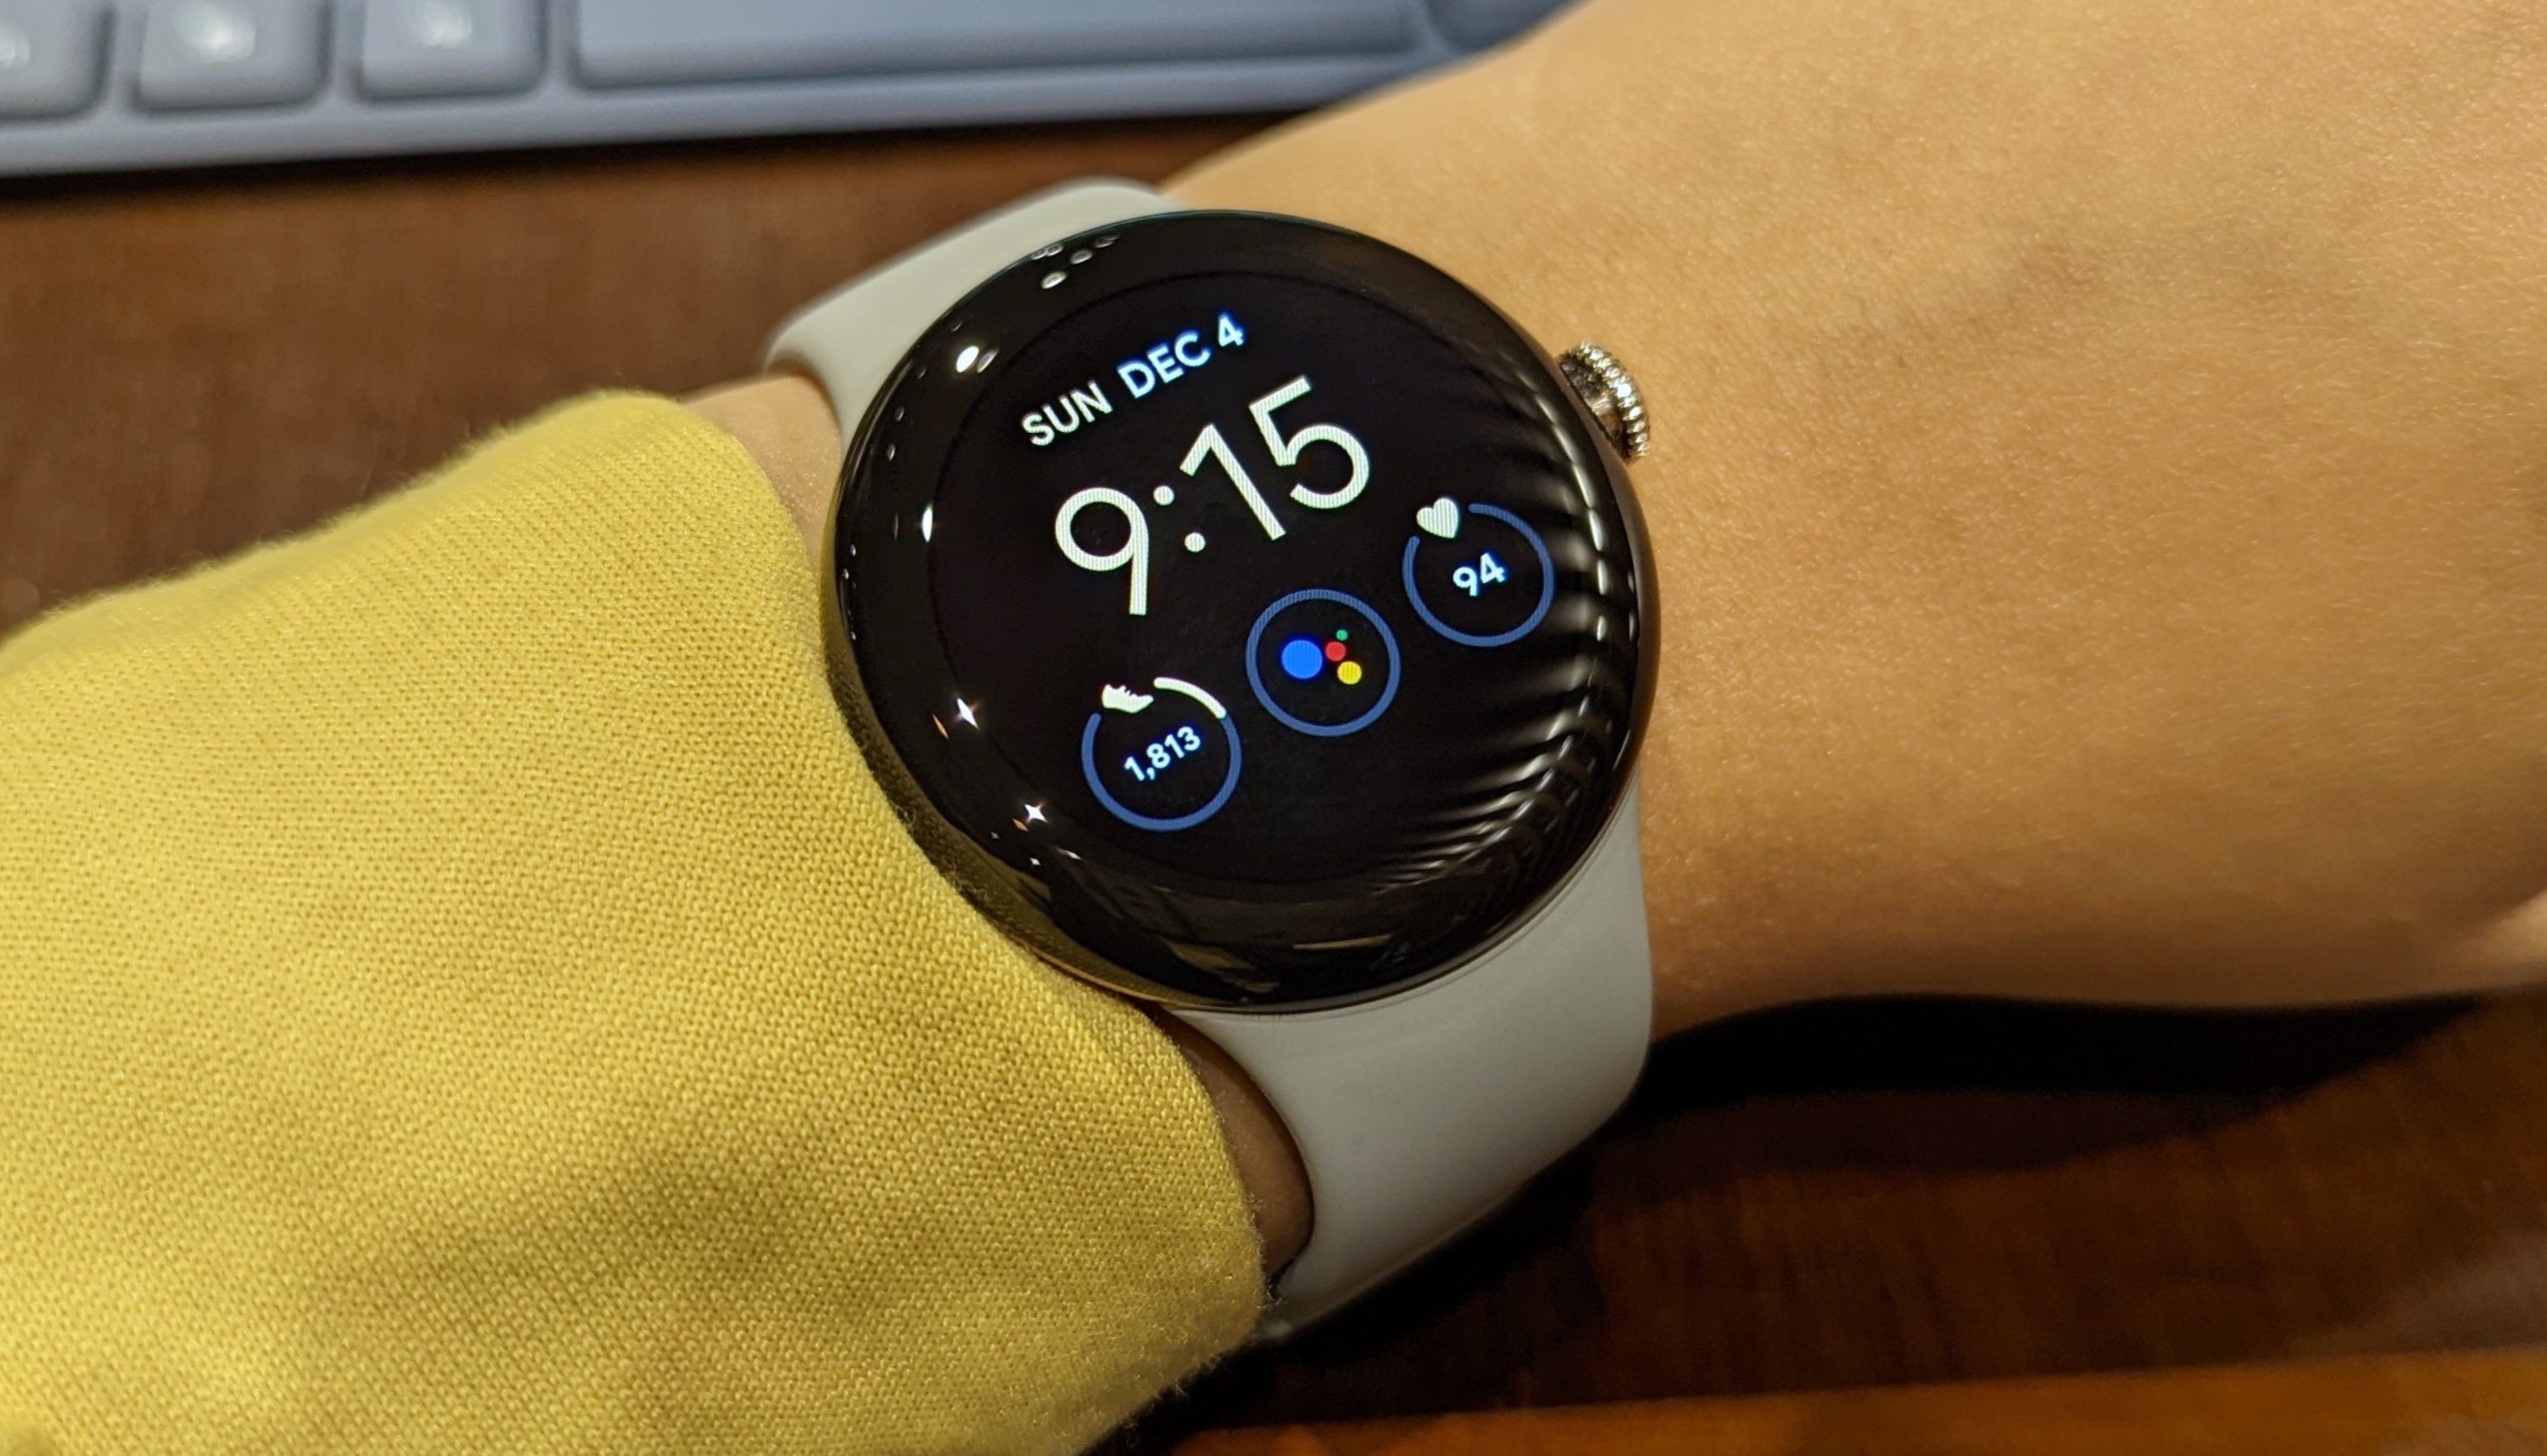 Benefits of Having a Google Wear OS Smartwatch